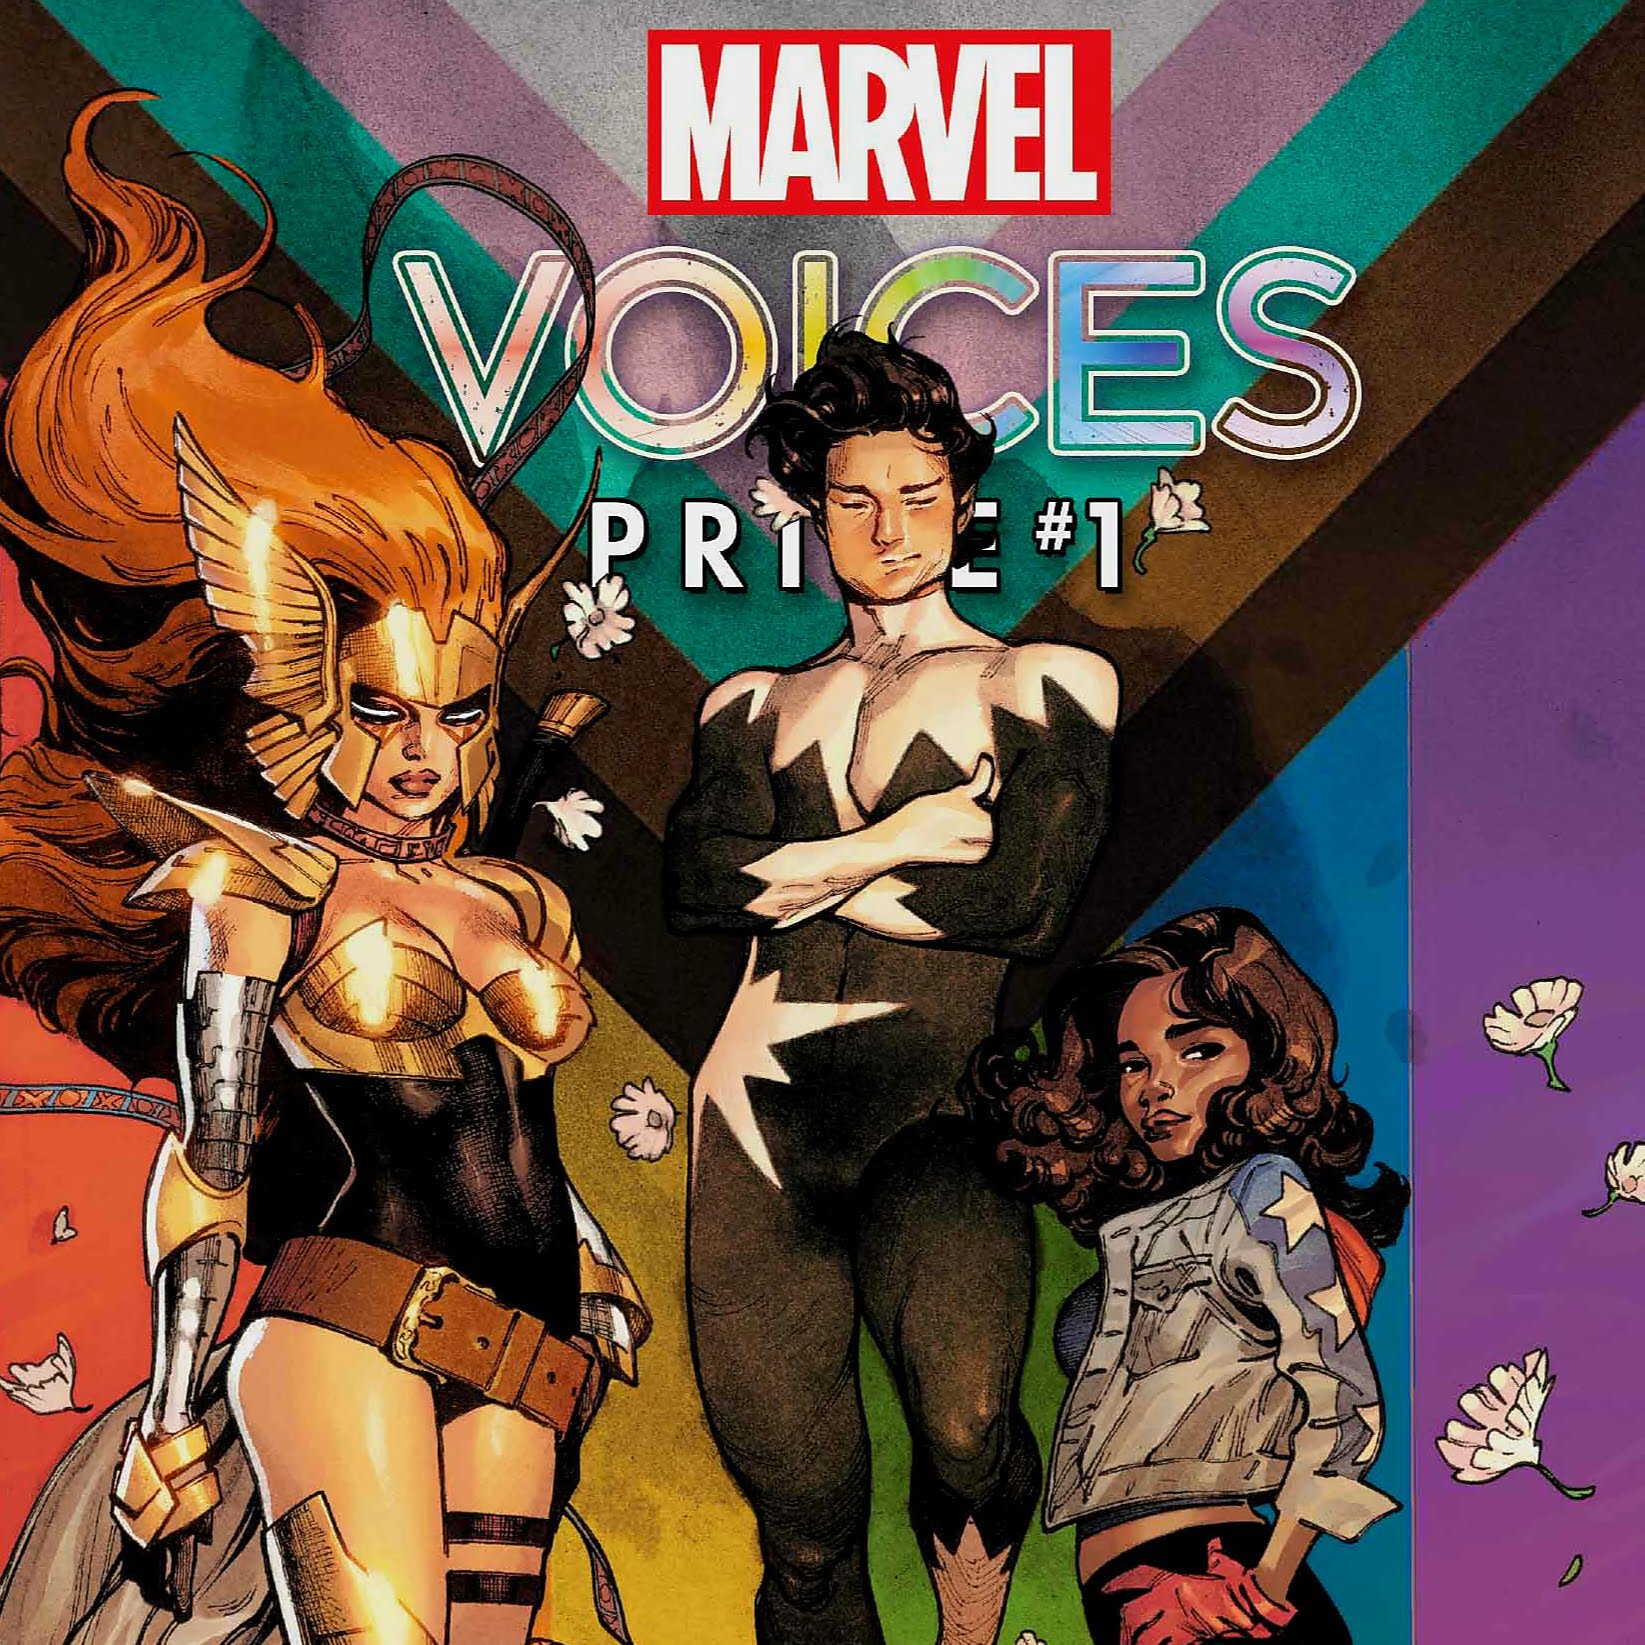 Marvel comics sneak peak of LGBTQIA cover via 360 magazine